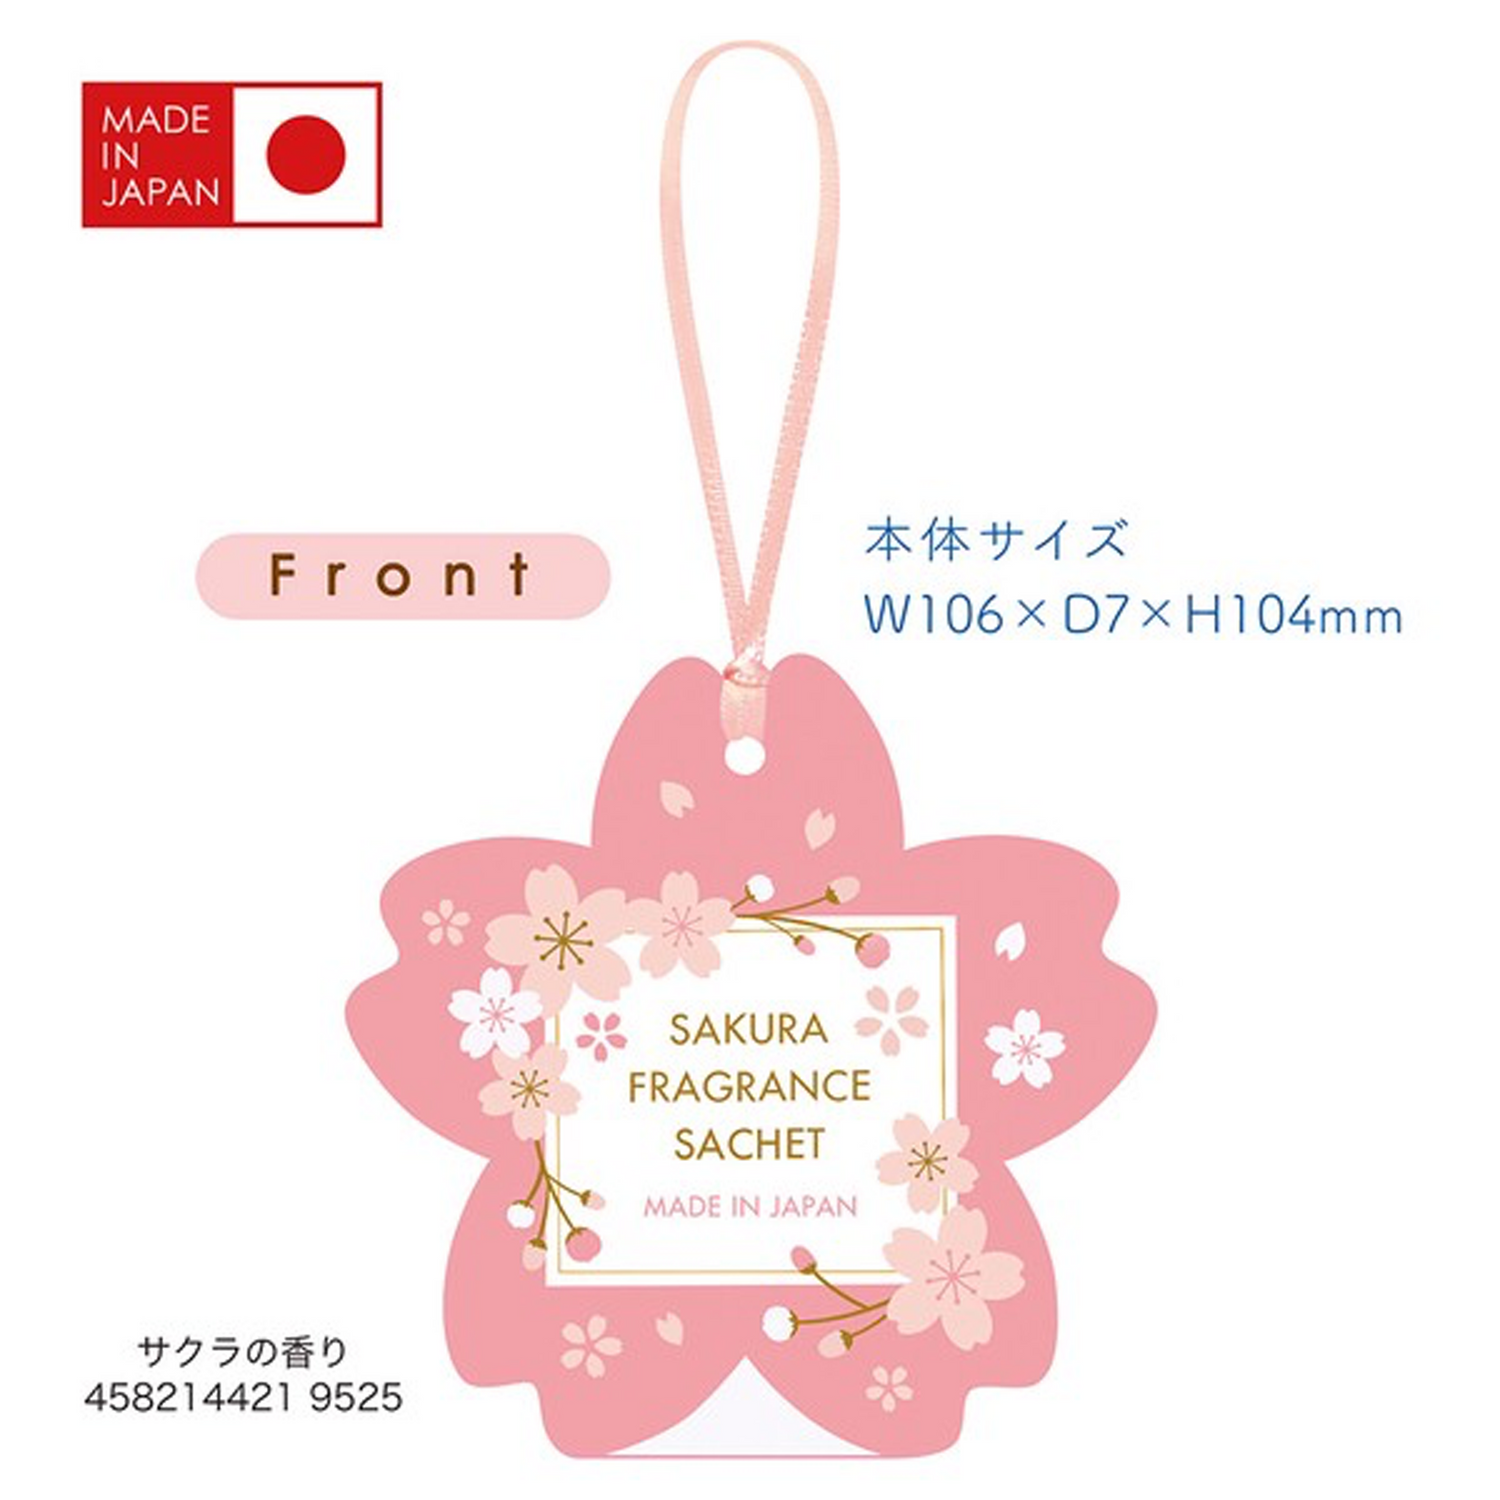 SAKURA hirari SH-32 Aroma sachet Sakura